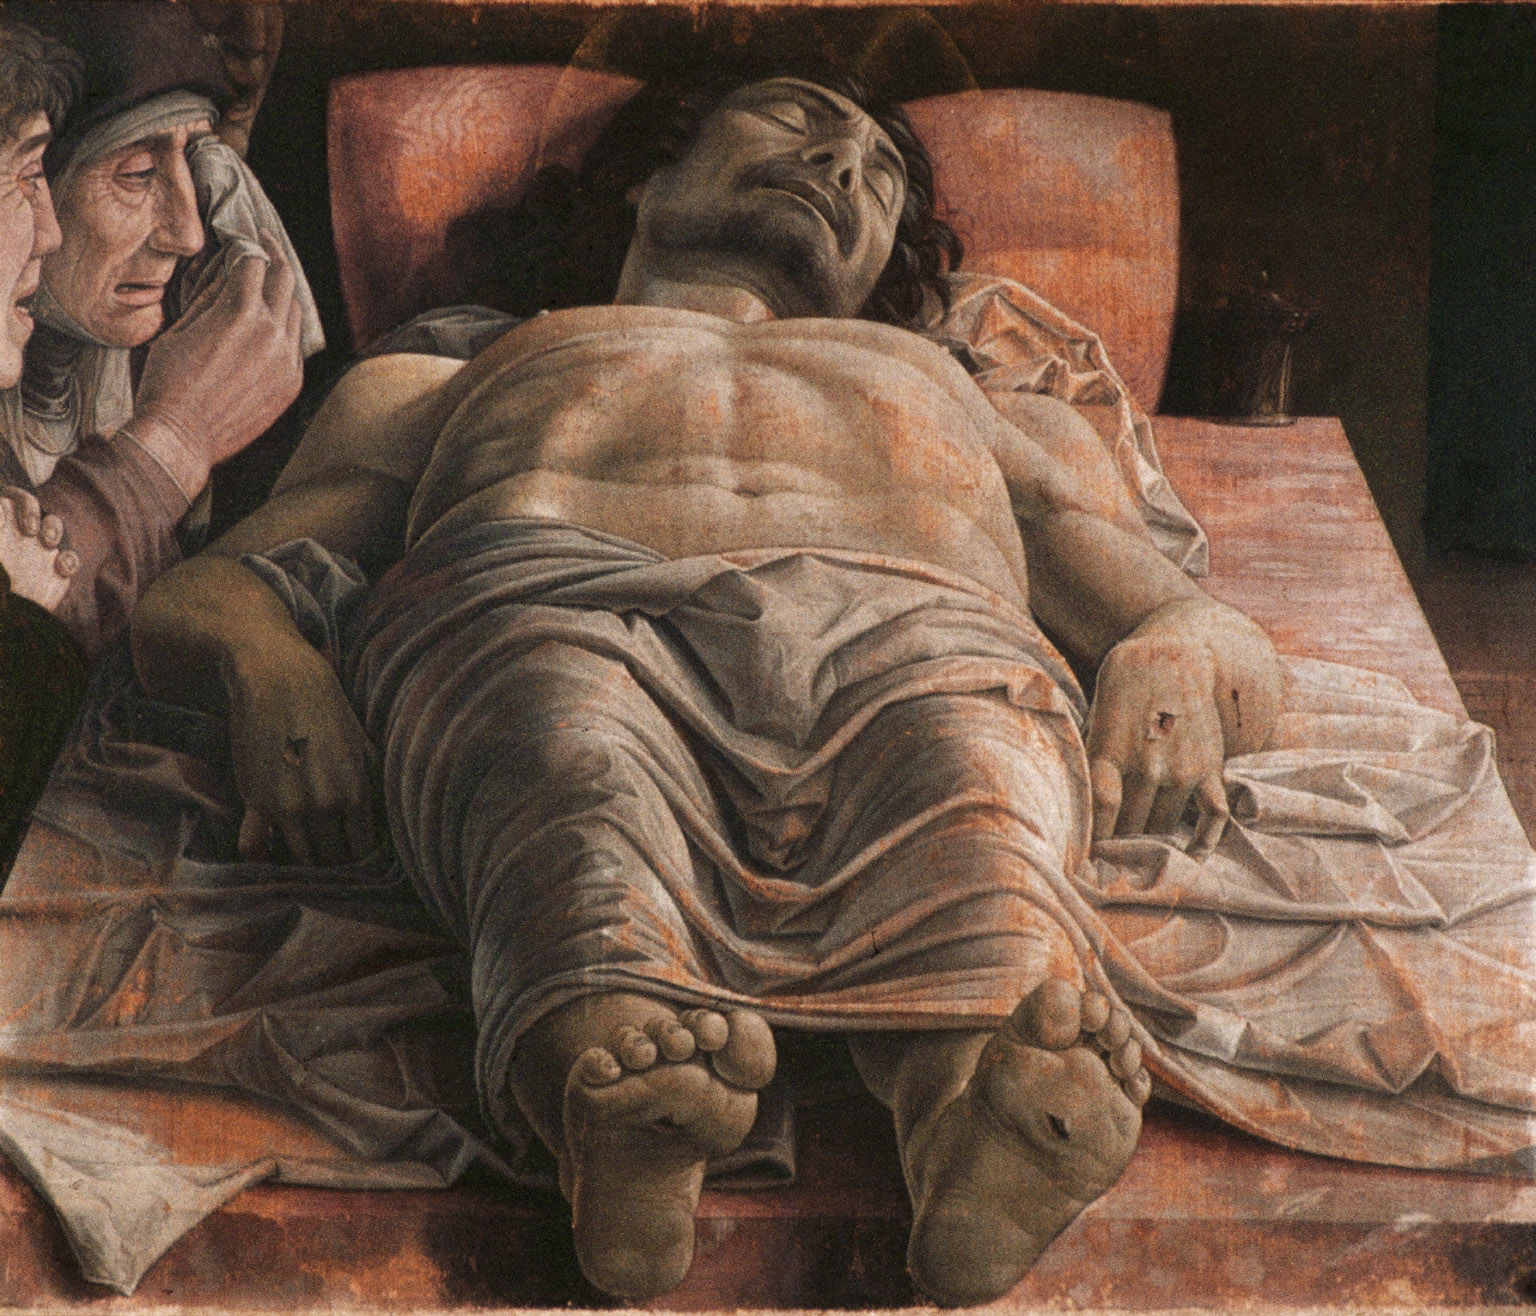 Andrea Mantegna - c. 1431 - September 13, 1506